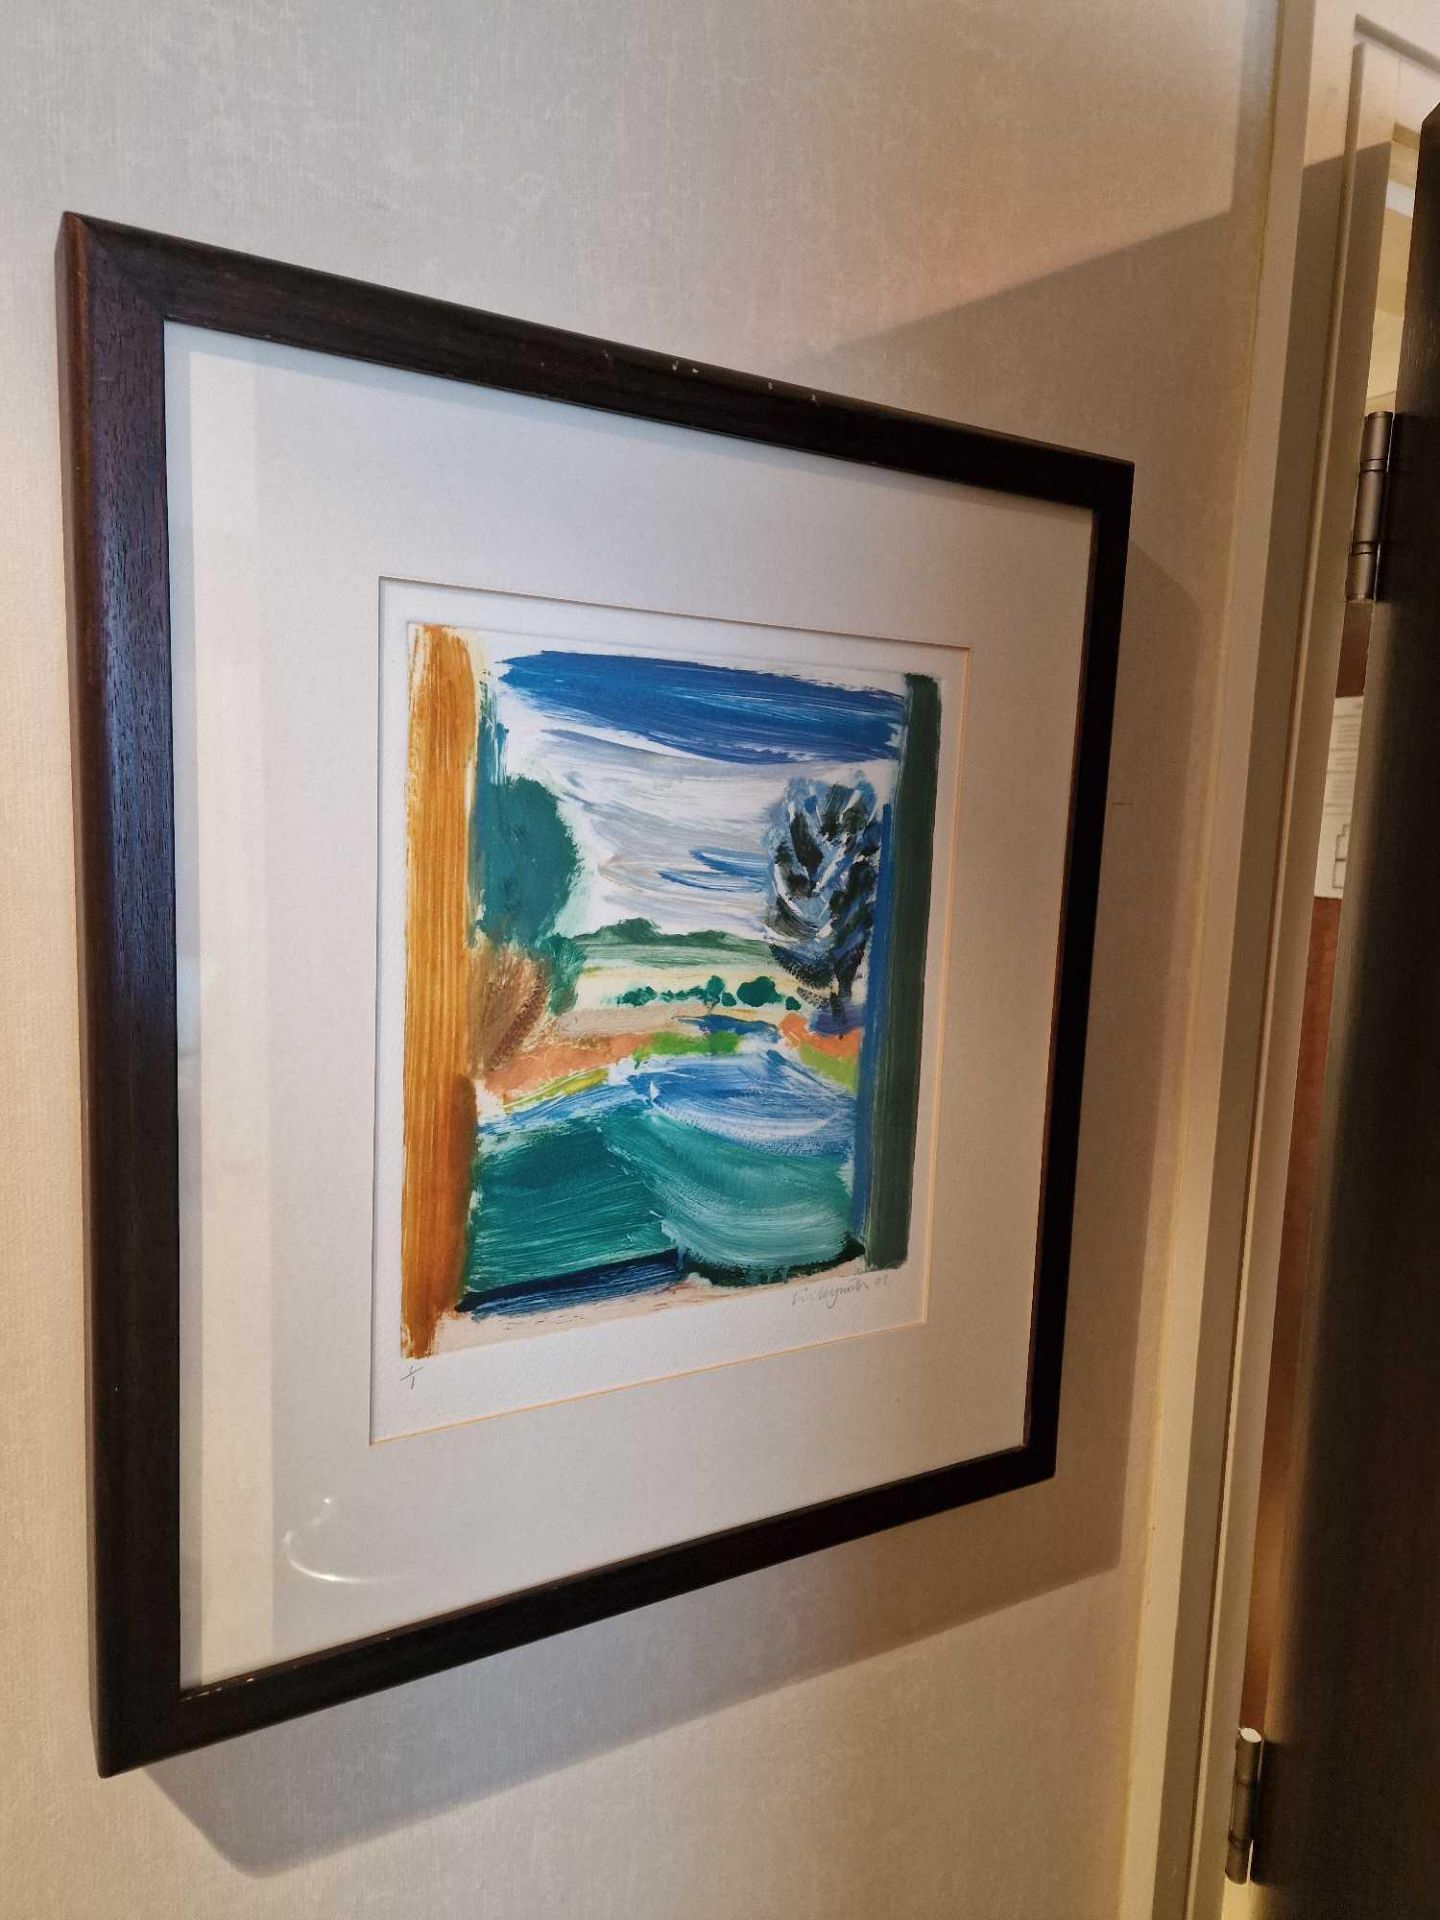 Liz Keyworth (British) framed art signed and dated 2002 1/1 in walnut coloured frame 45 x 50cm (Room